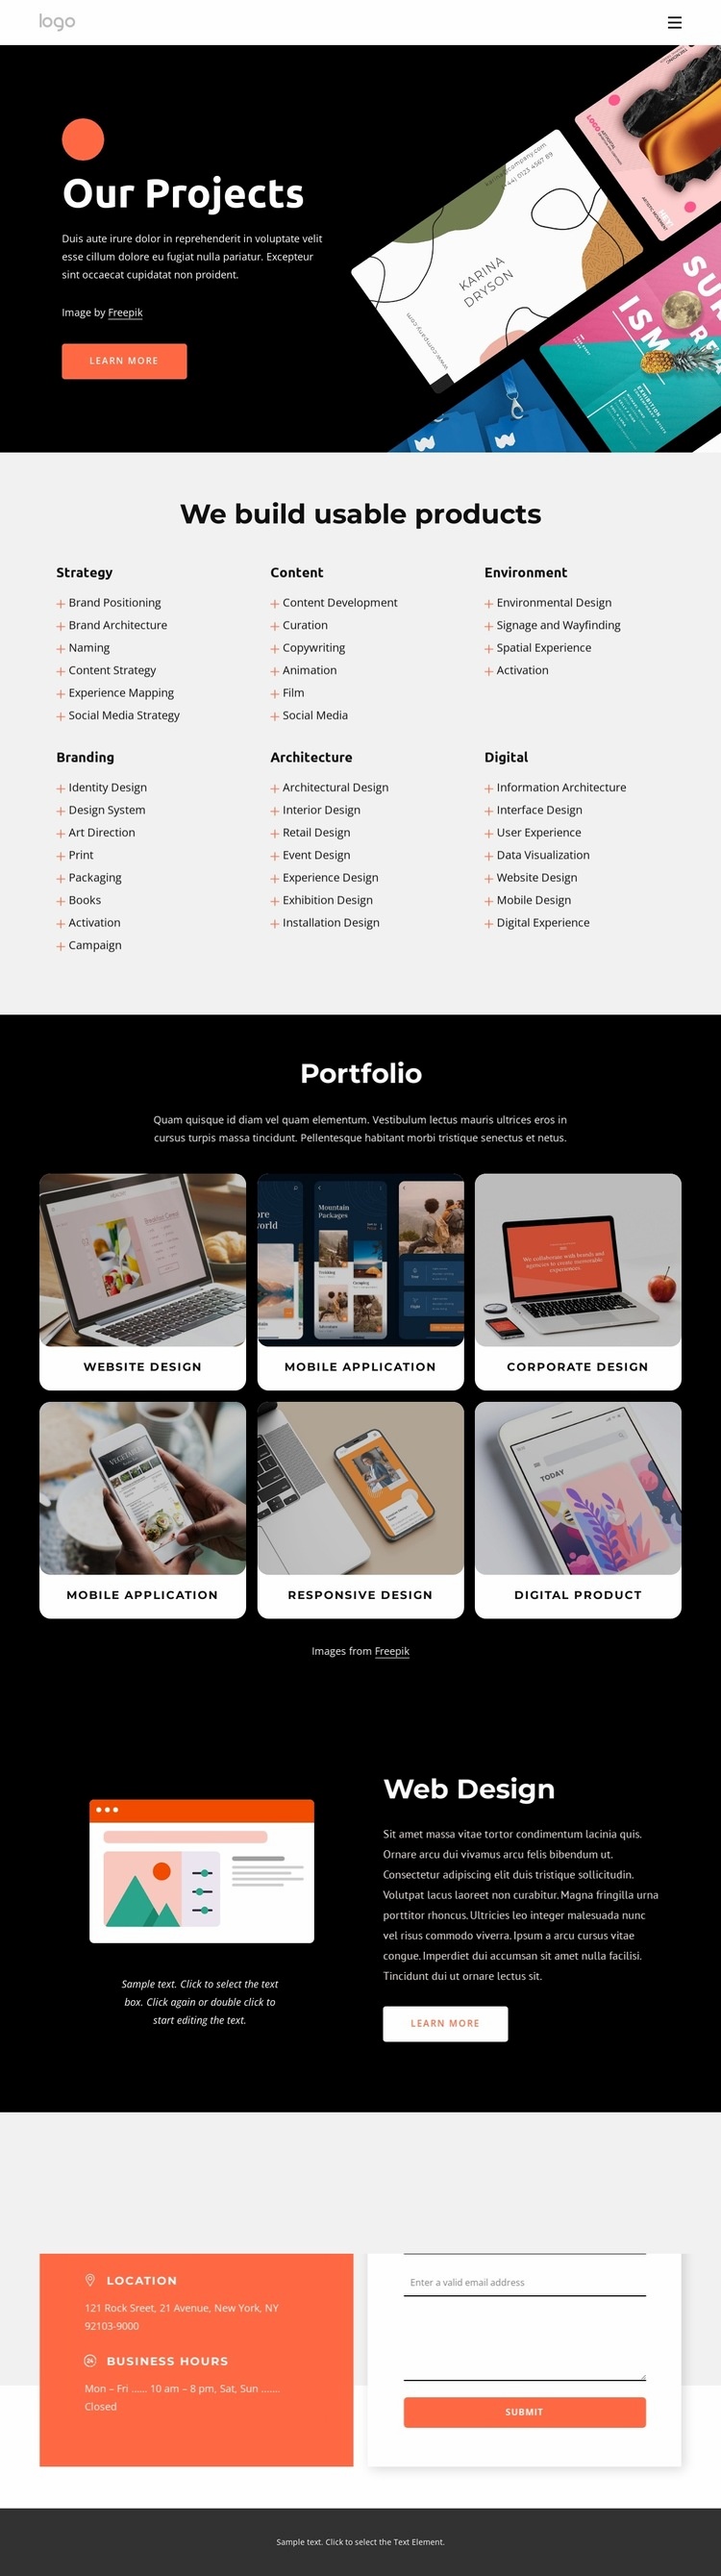 Our creative portfolio Web Page Design